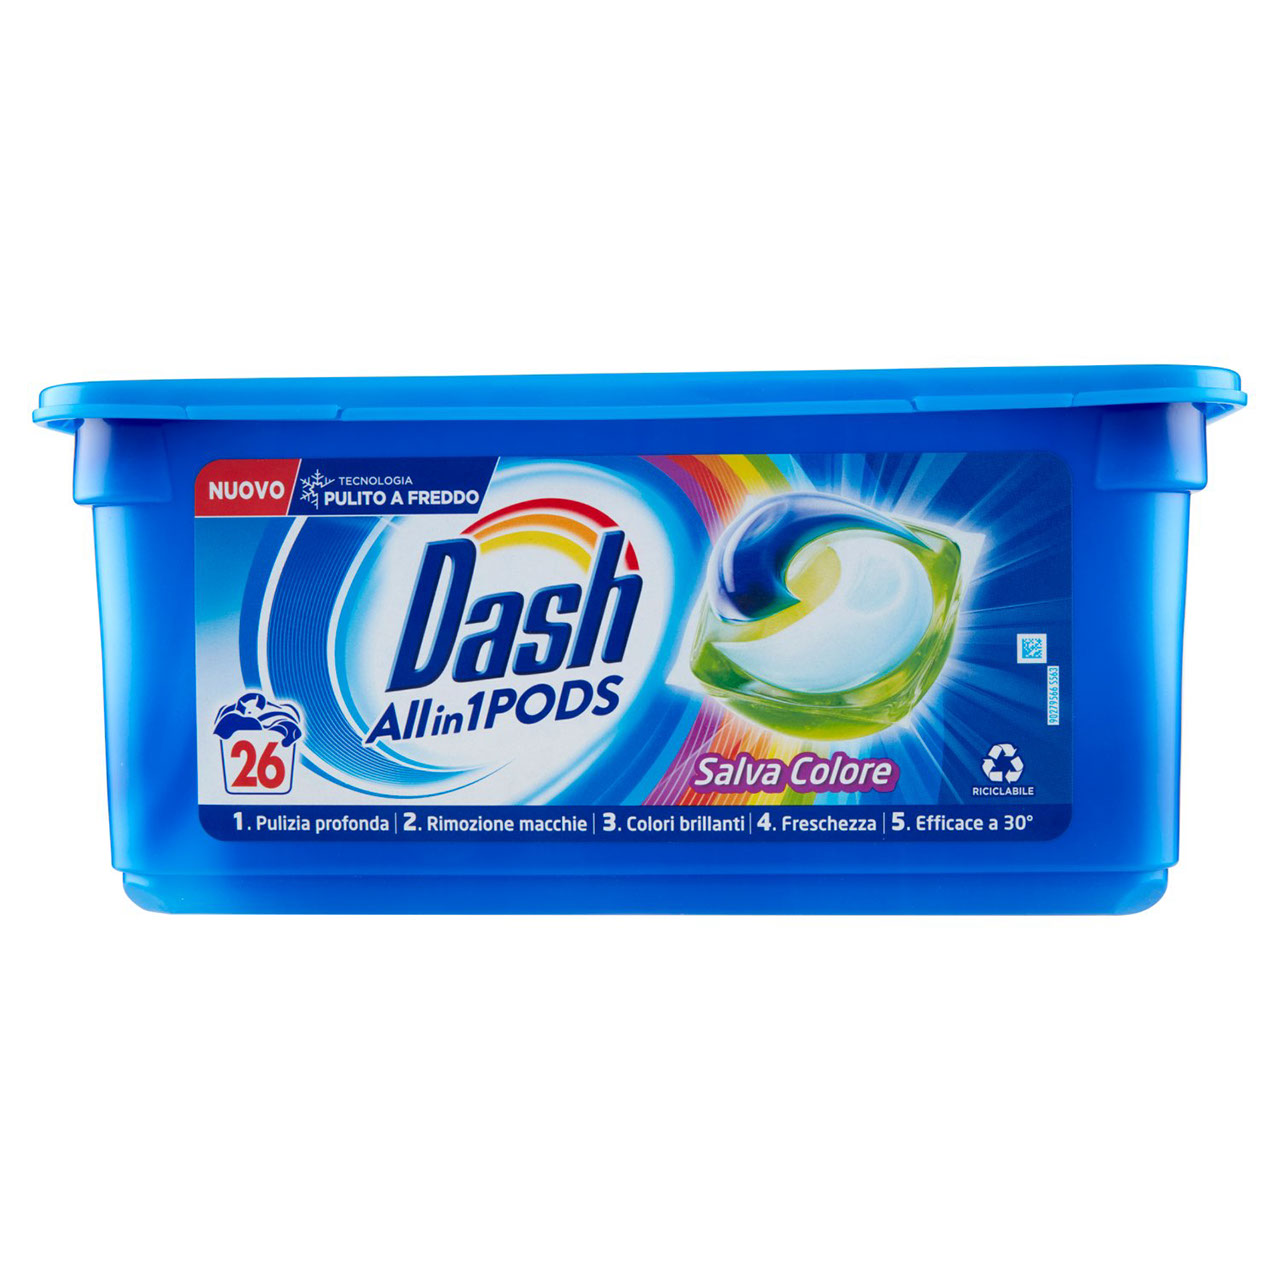 Dash Pods Detersivo Lavatrice per capi colorati online